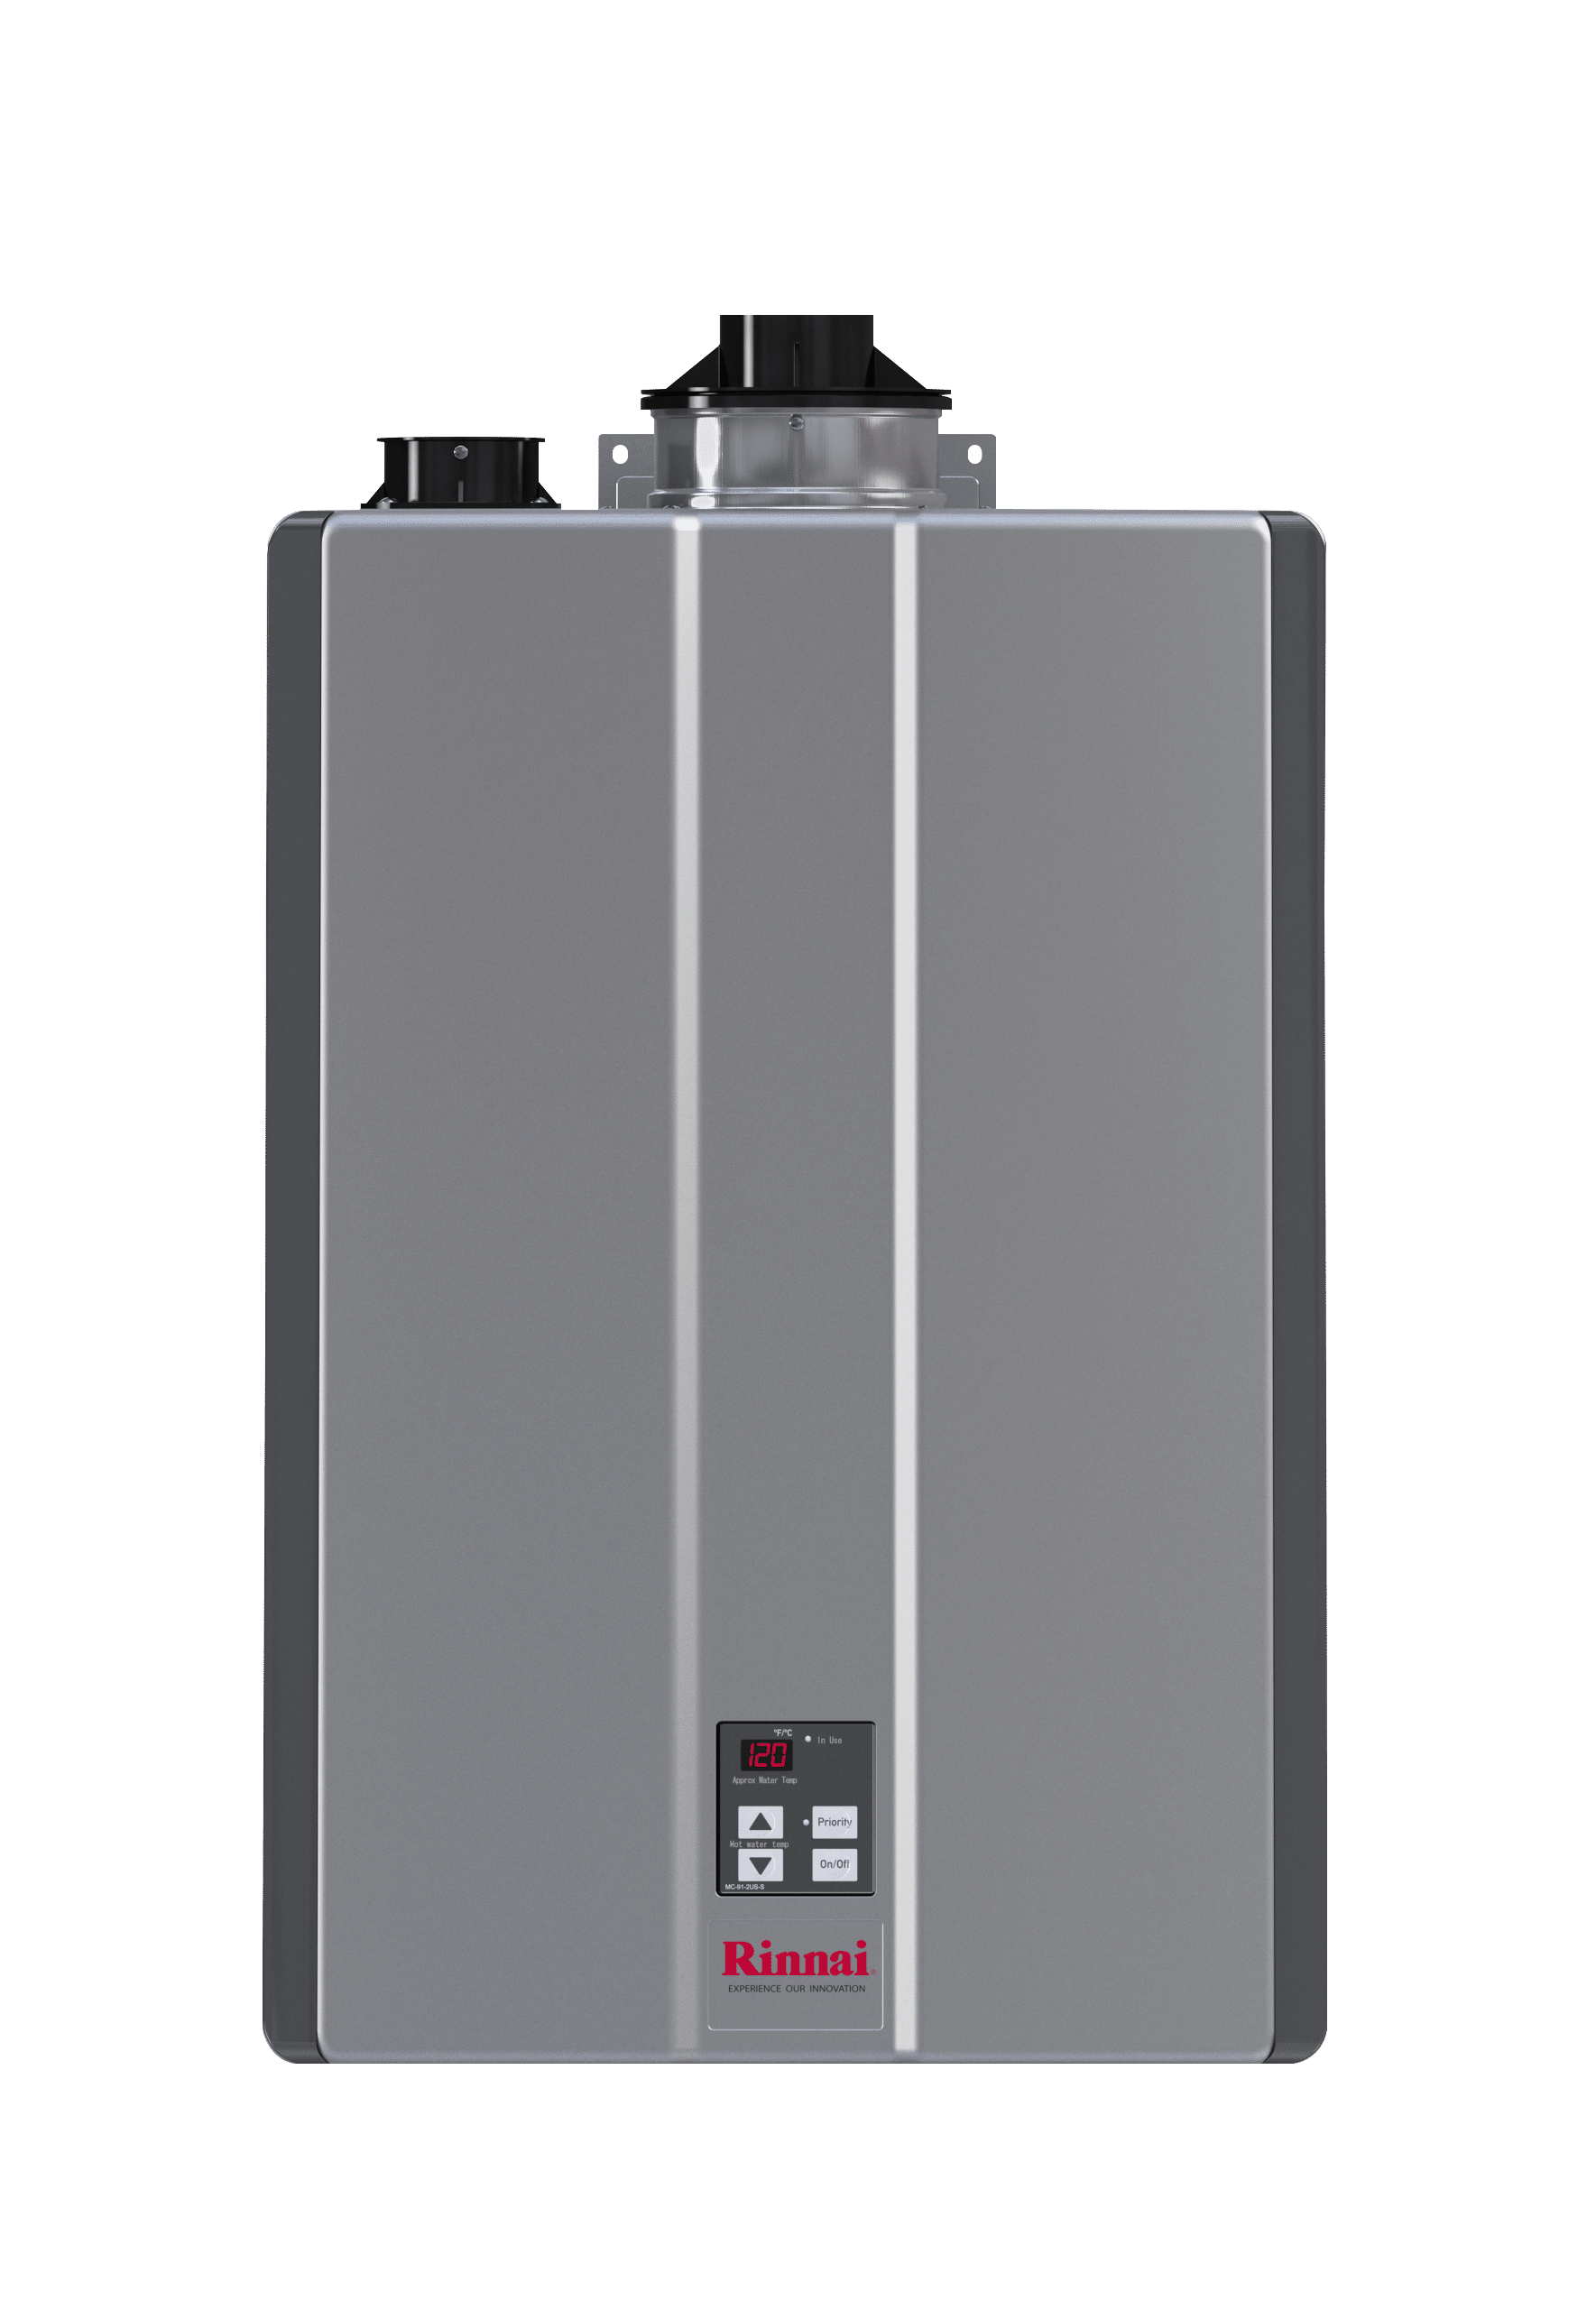 SENSEI™ RU160i Super High-Efficiency Plus Tankless Water Heater